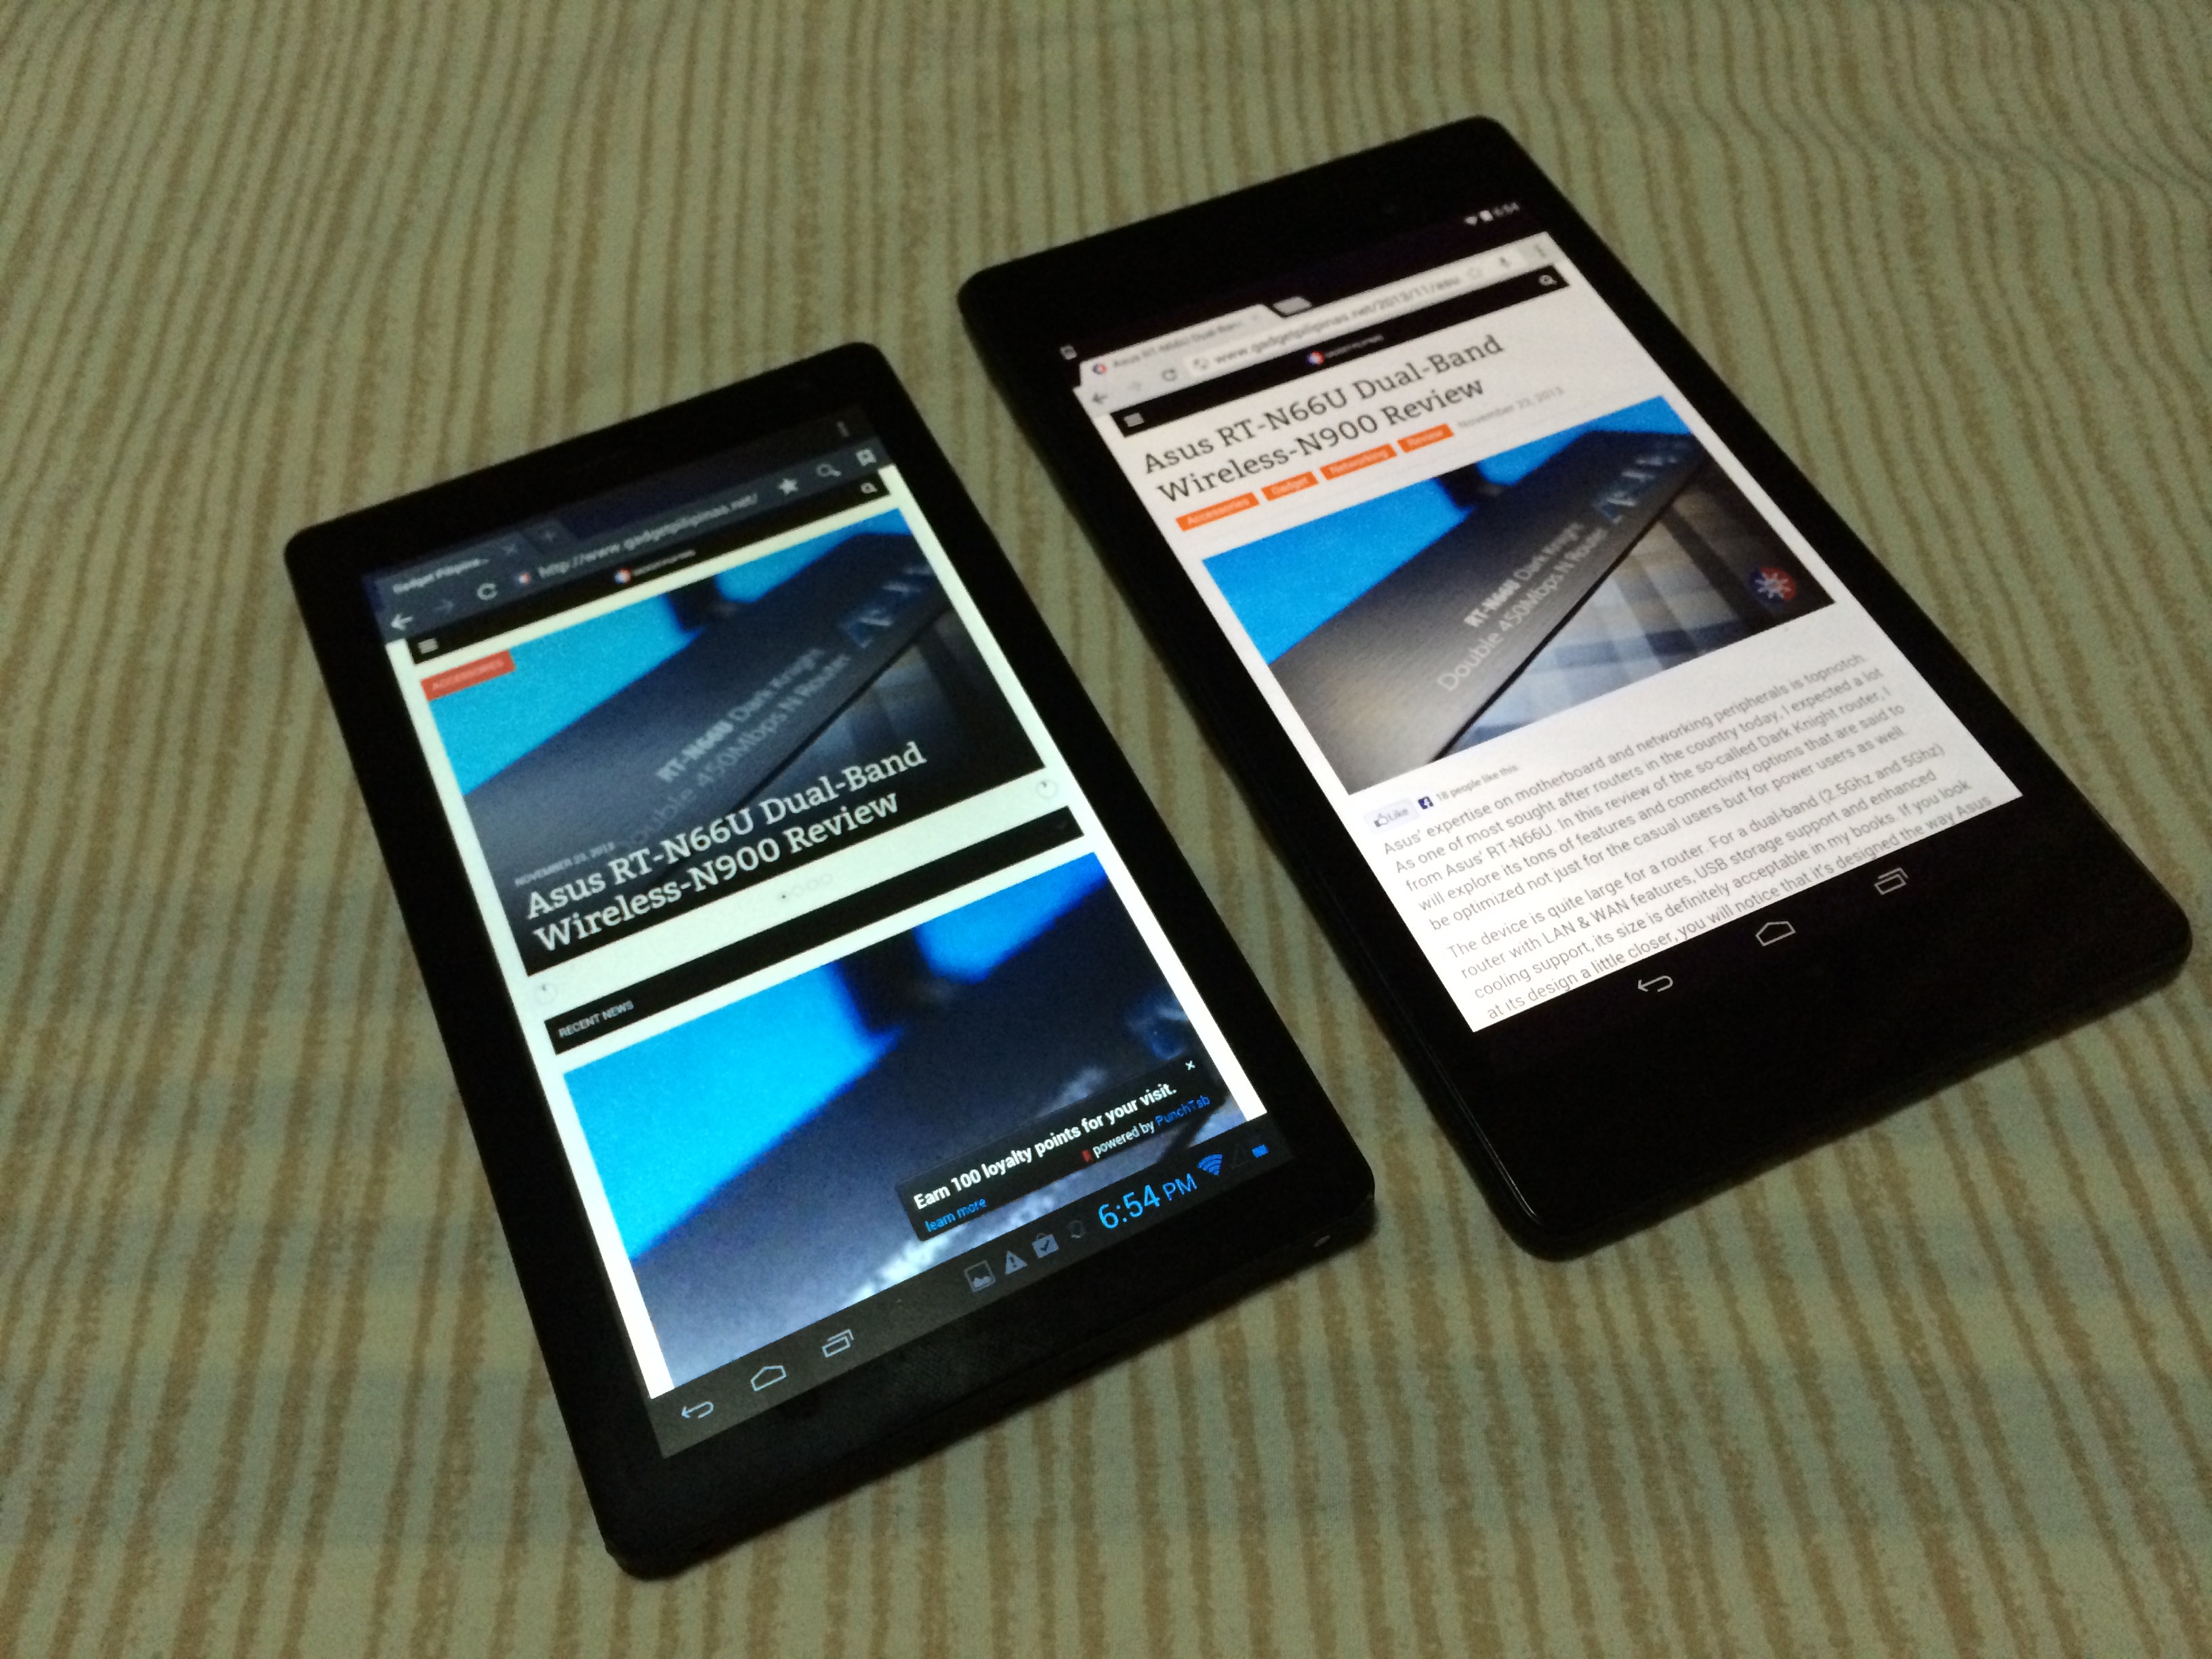 O+ Fab 3g vs Nexus 7 (2013)